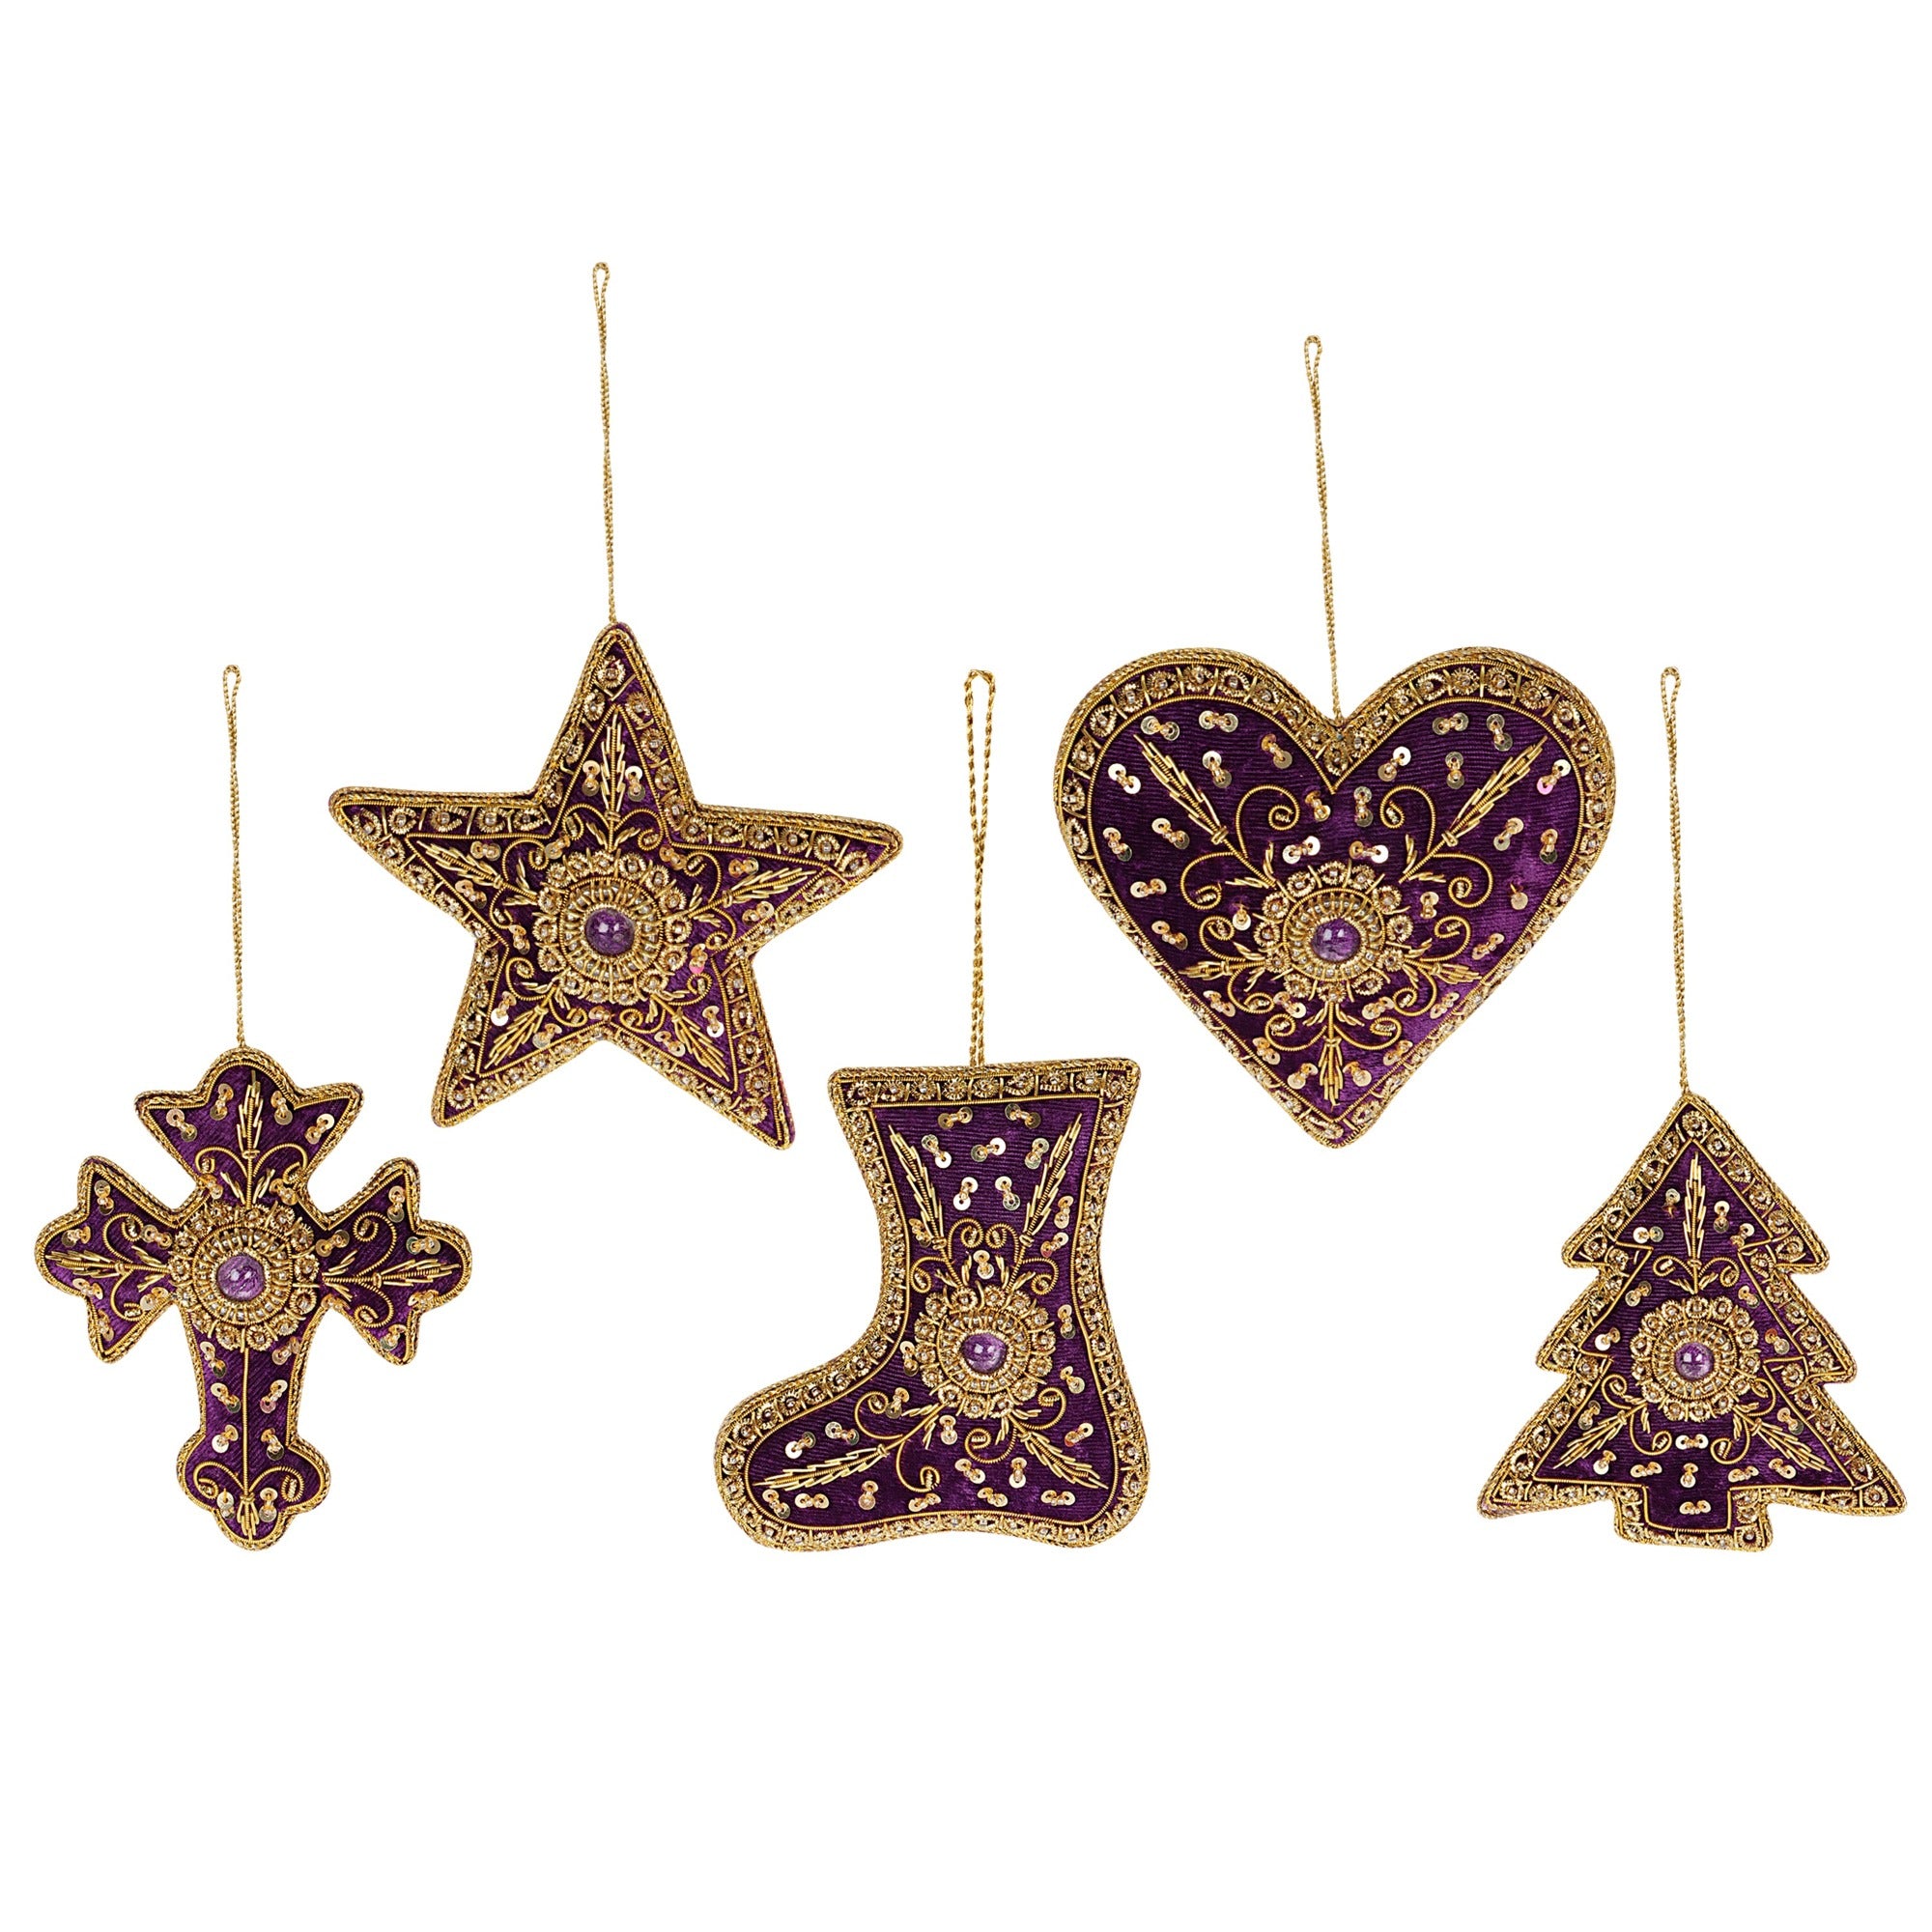 Festive shine Stars, Hearts, Cross, Shoe & tree Christmas ornaments set of 5 pieces for holiday decor (1SET=5PC)